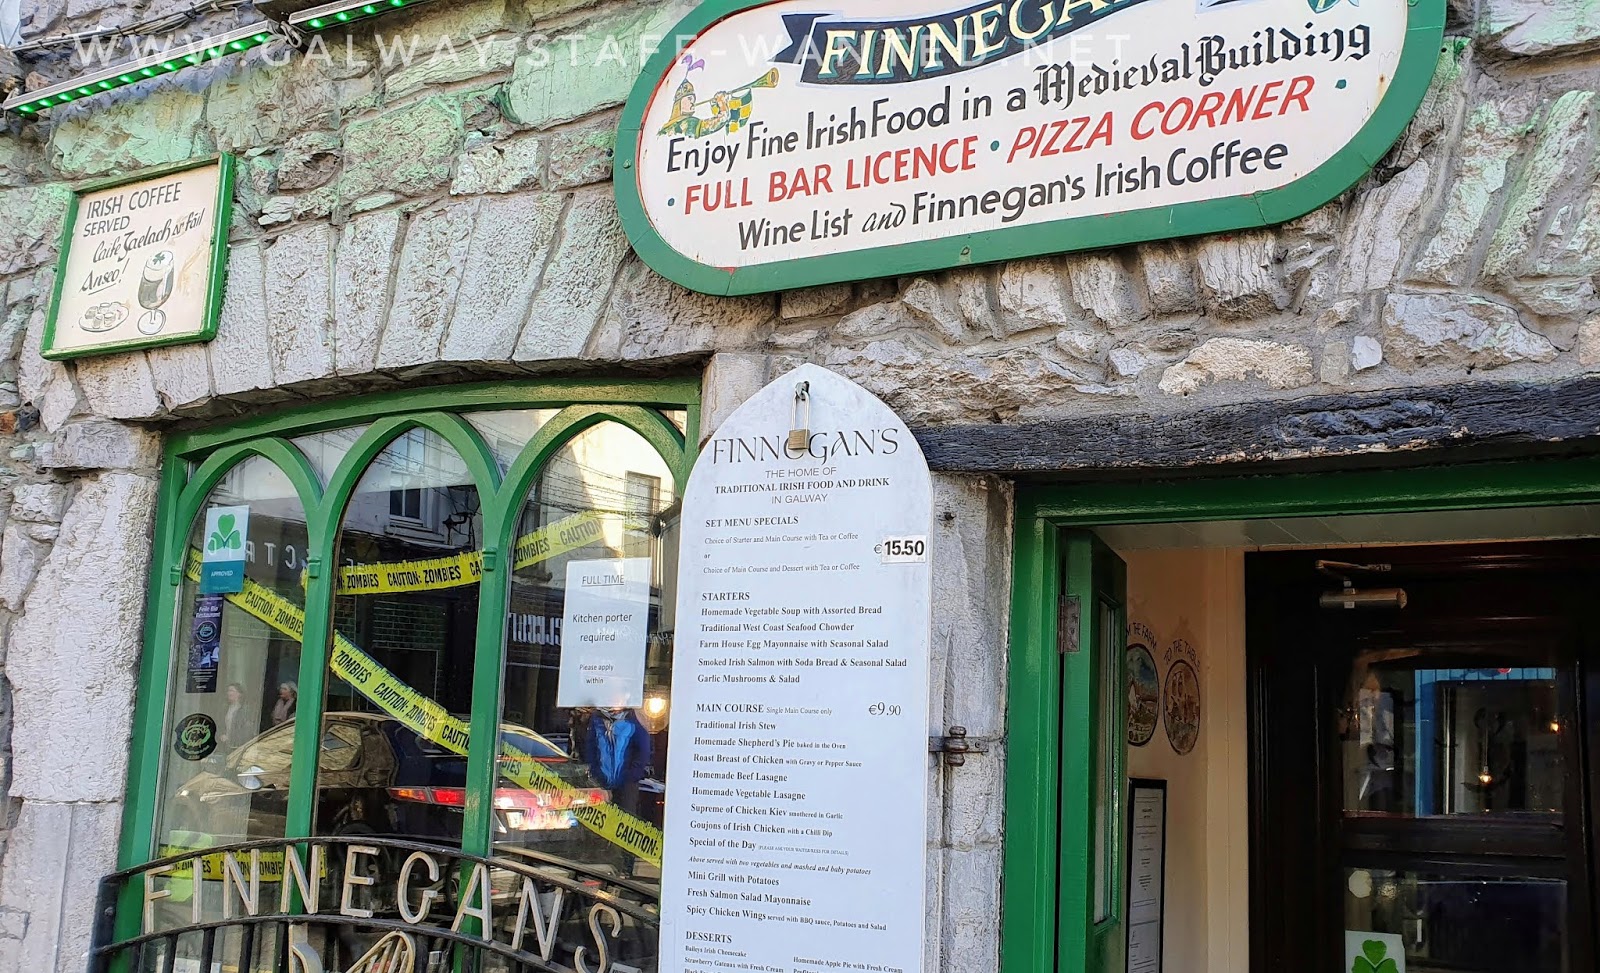 sign in Irish restaurant window with Halloween decorations - and Finnegans restaurant menu board - main €15.50.